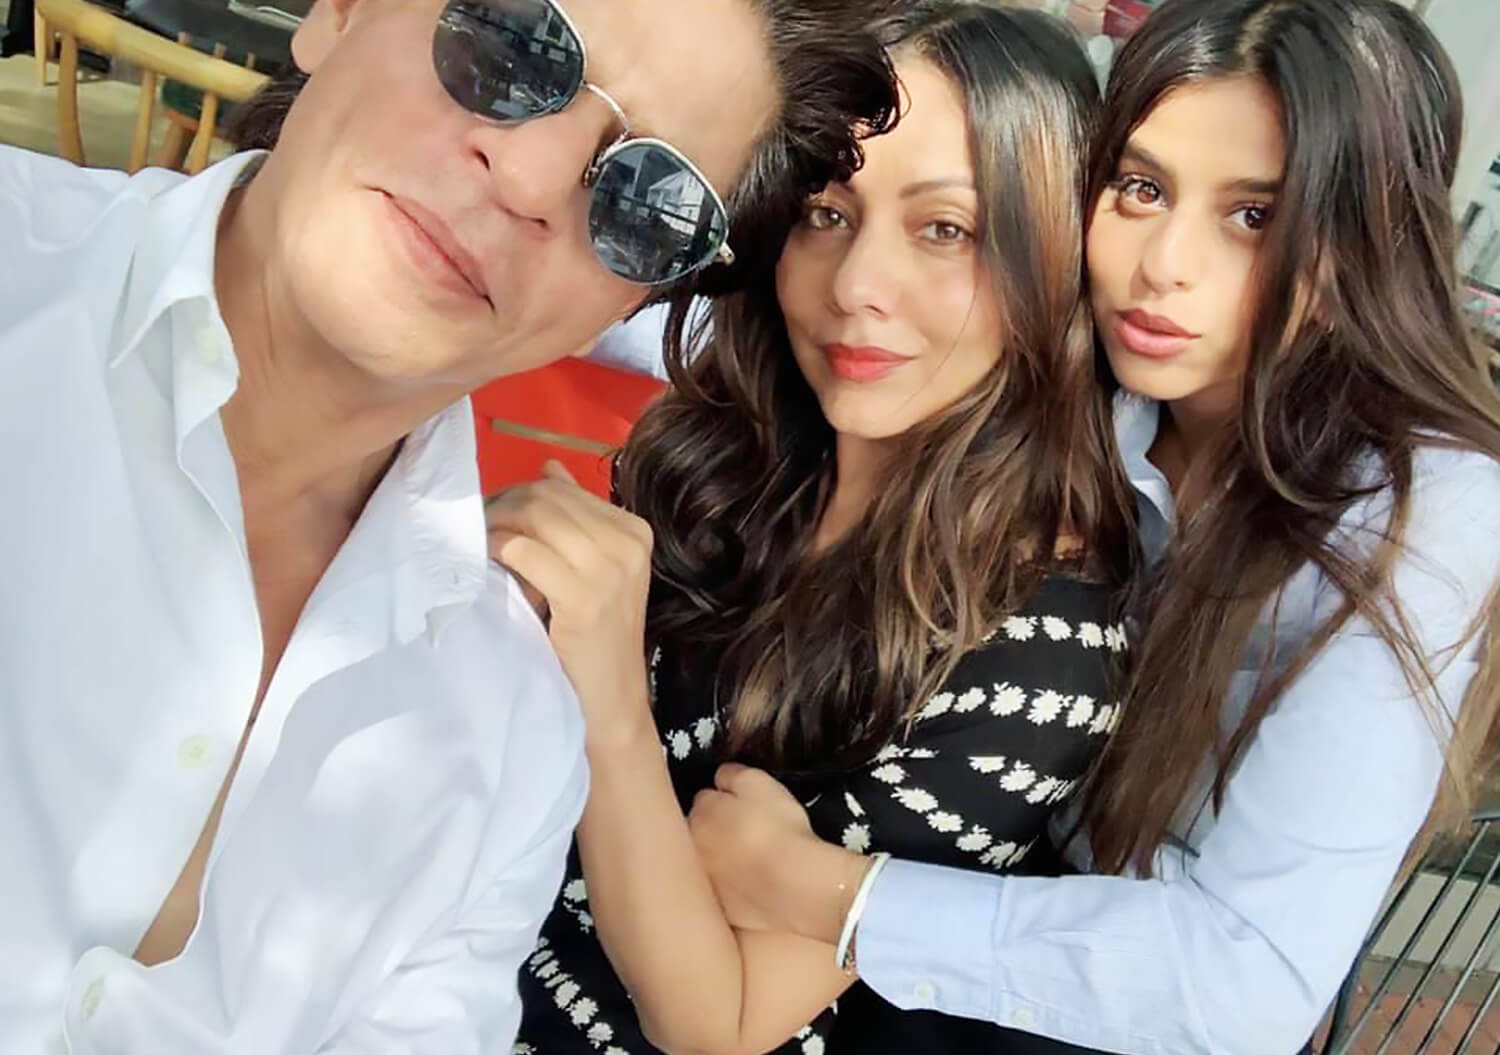 Shah Rukh Khan's Daughter, Suhana Khan Flaunts A Black Top With An